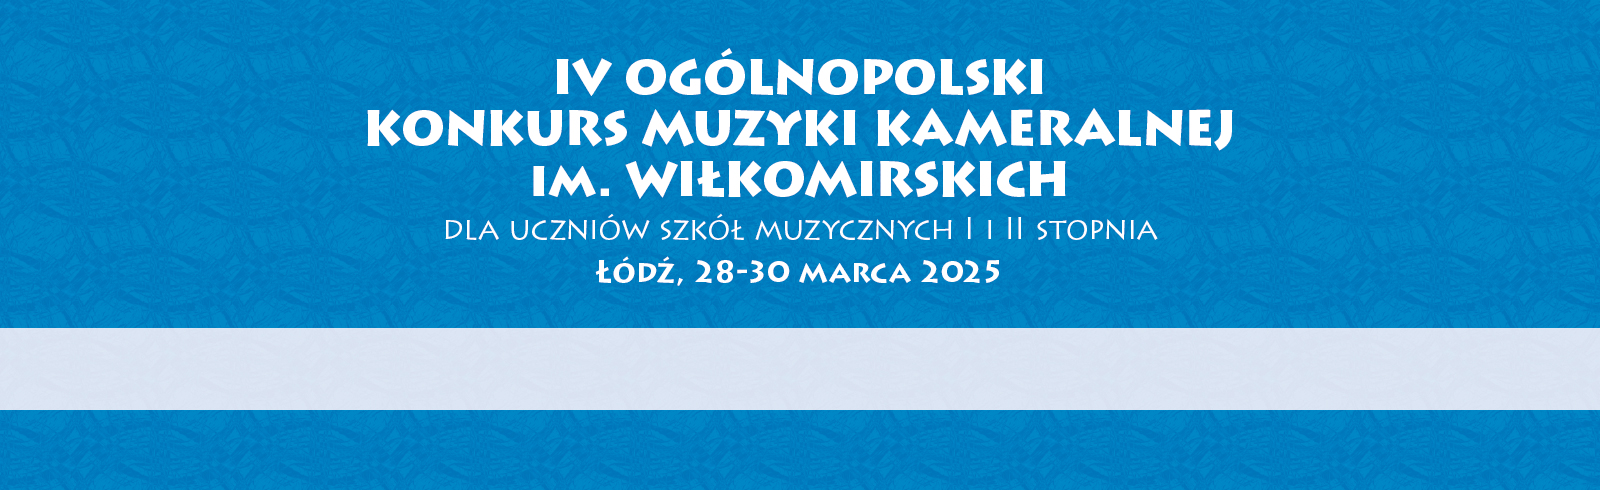 IV Ogólnopolski Konkurs Muzyki Kameralnej 2025-03-28